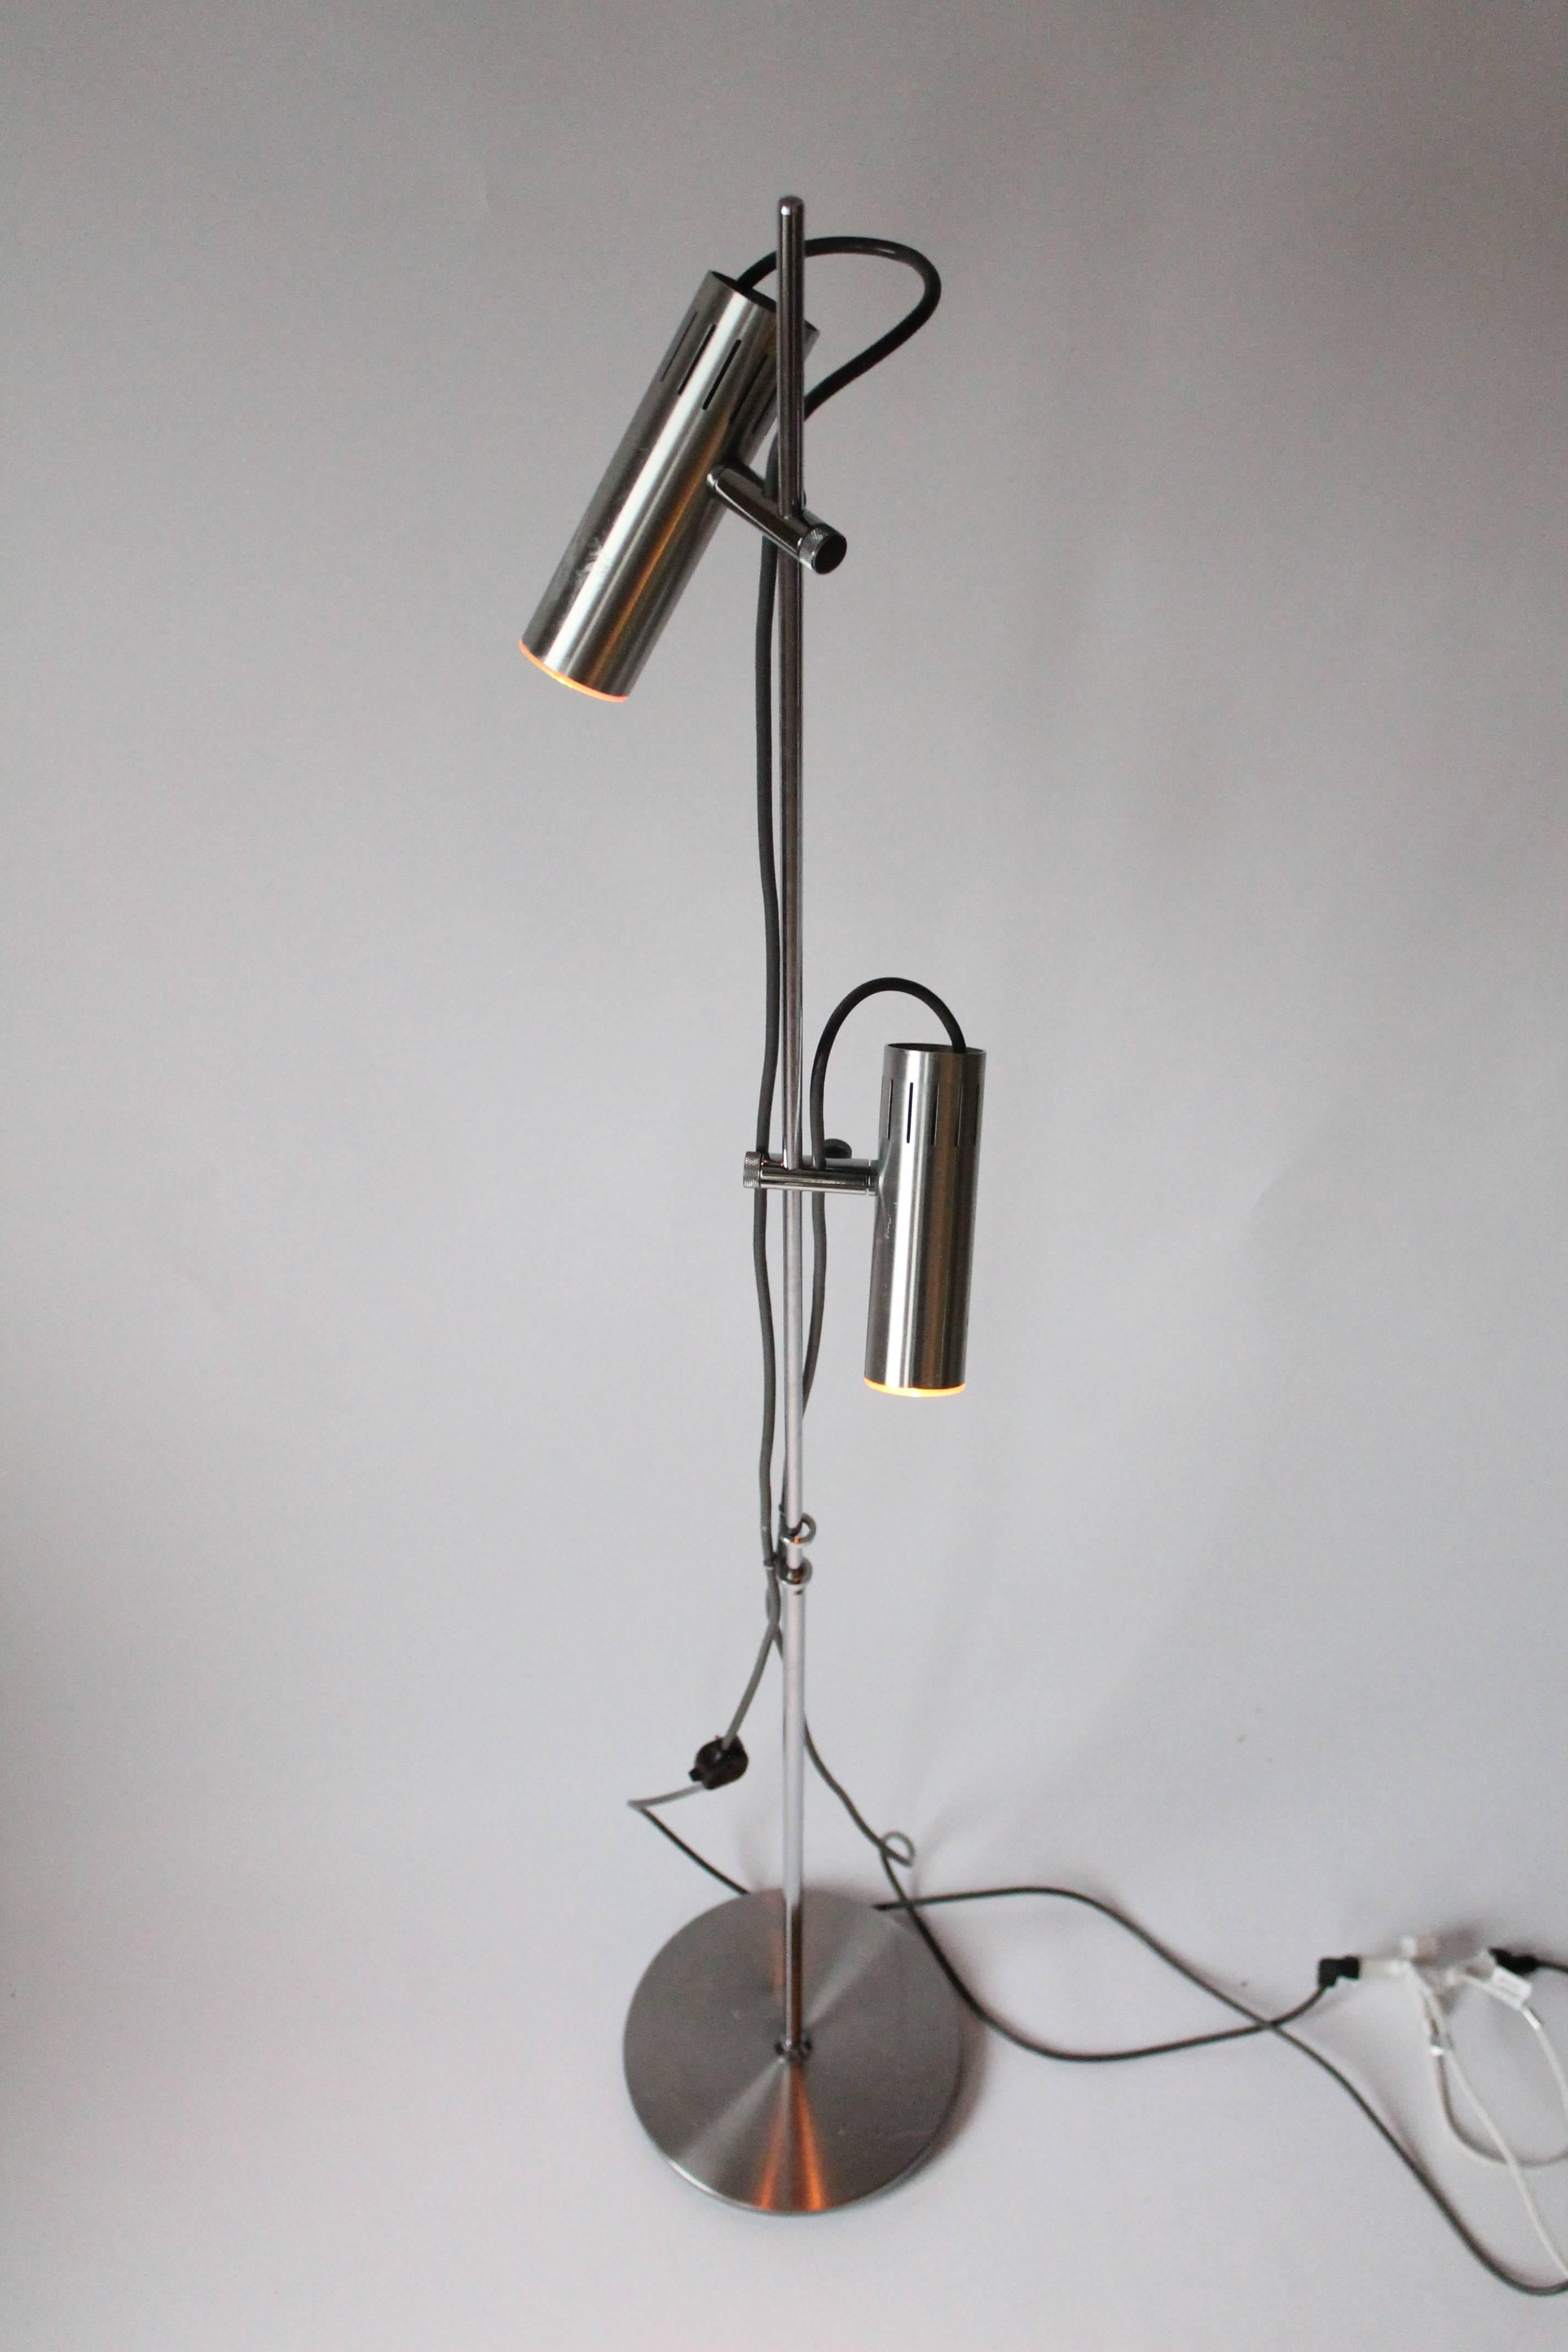 Lacquered Alain Richard A14 by Disderot Twin Shade Chromed Floor Lamp, 1959, France